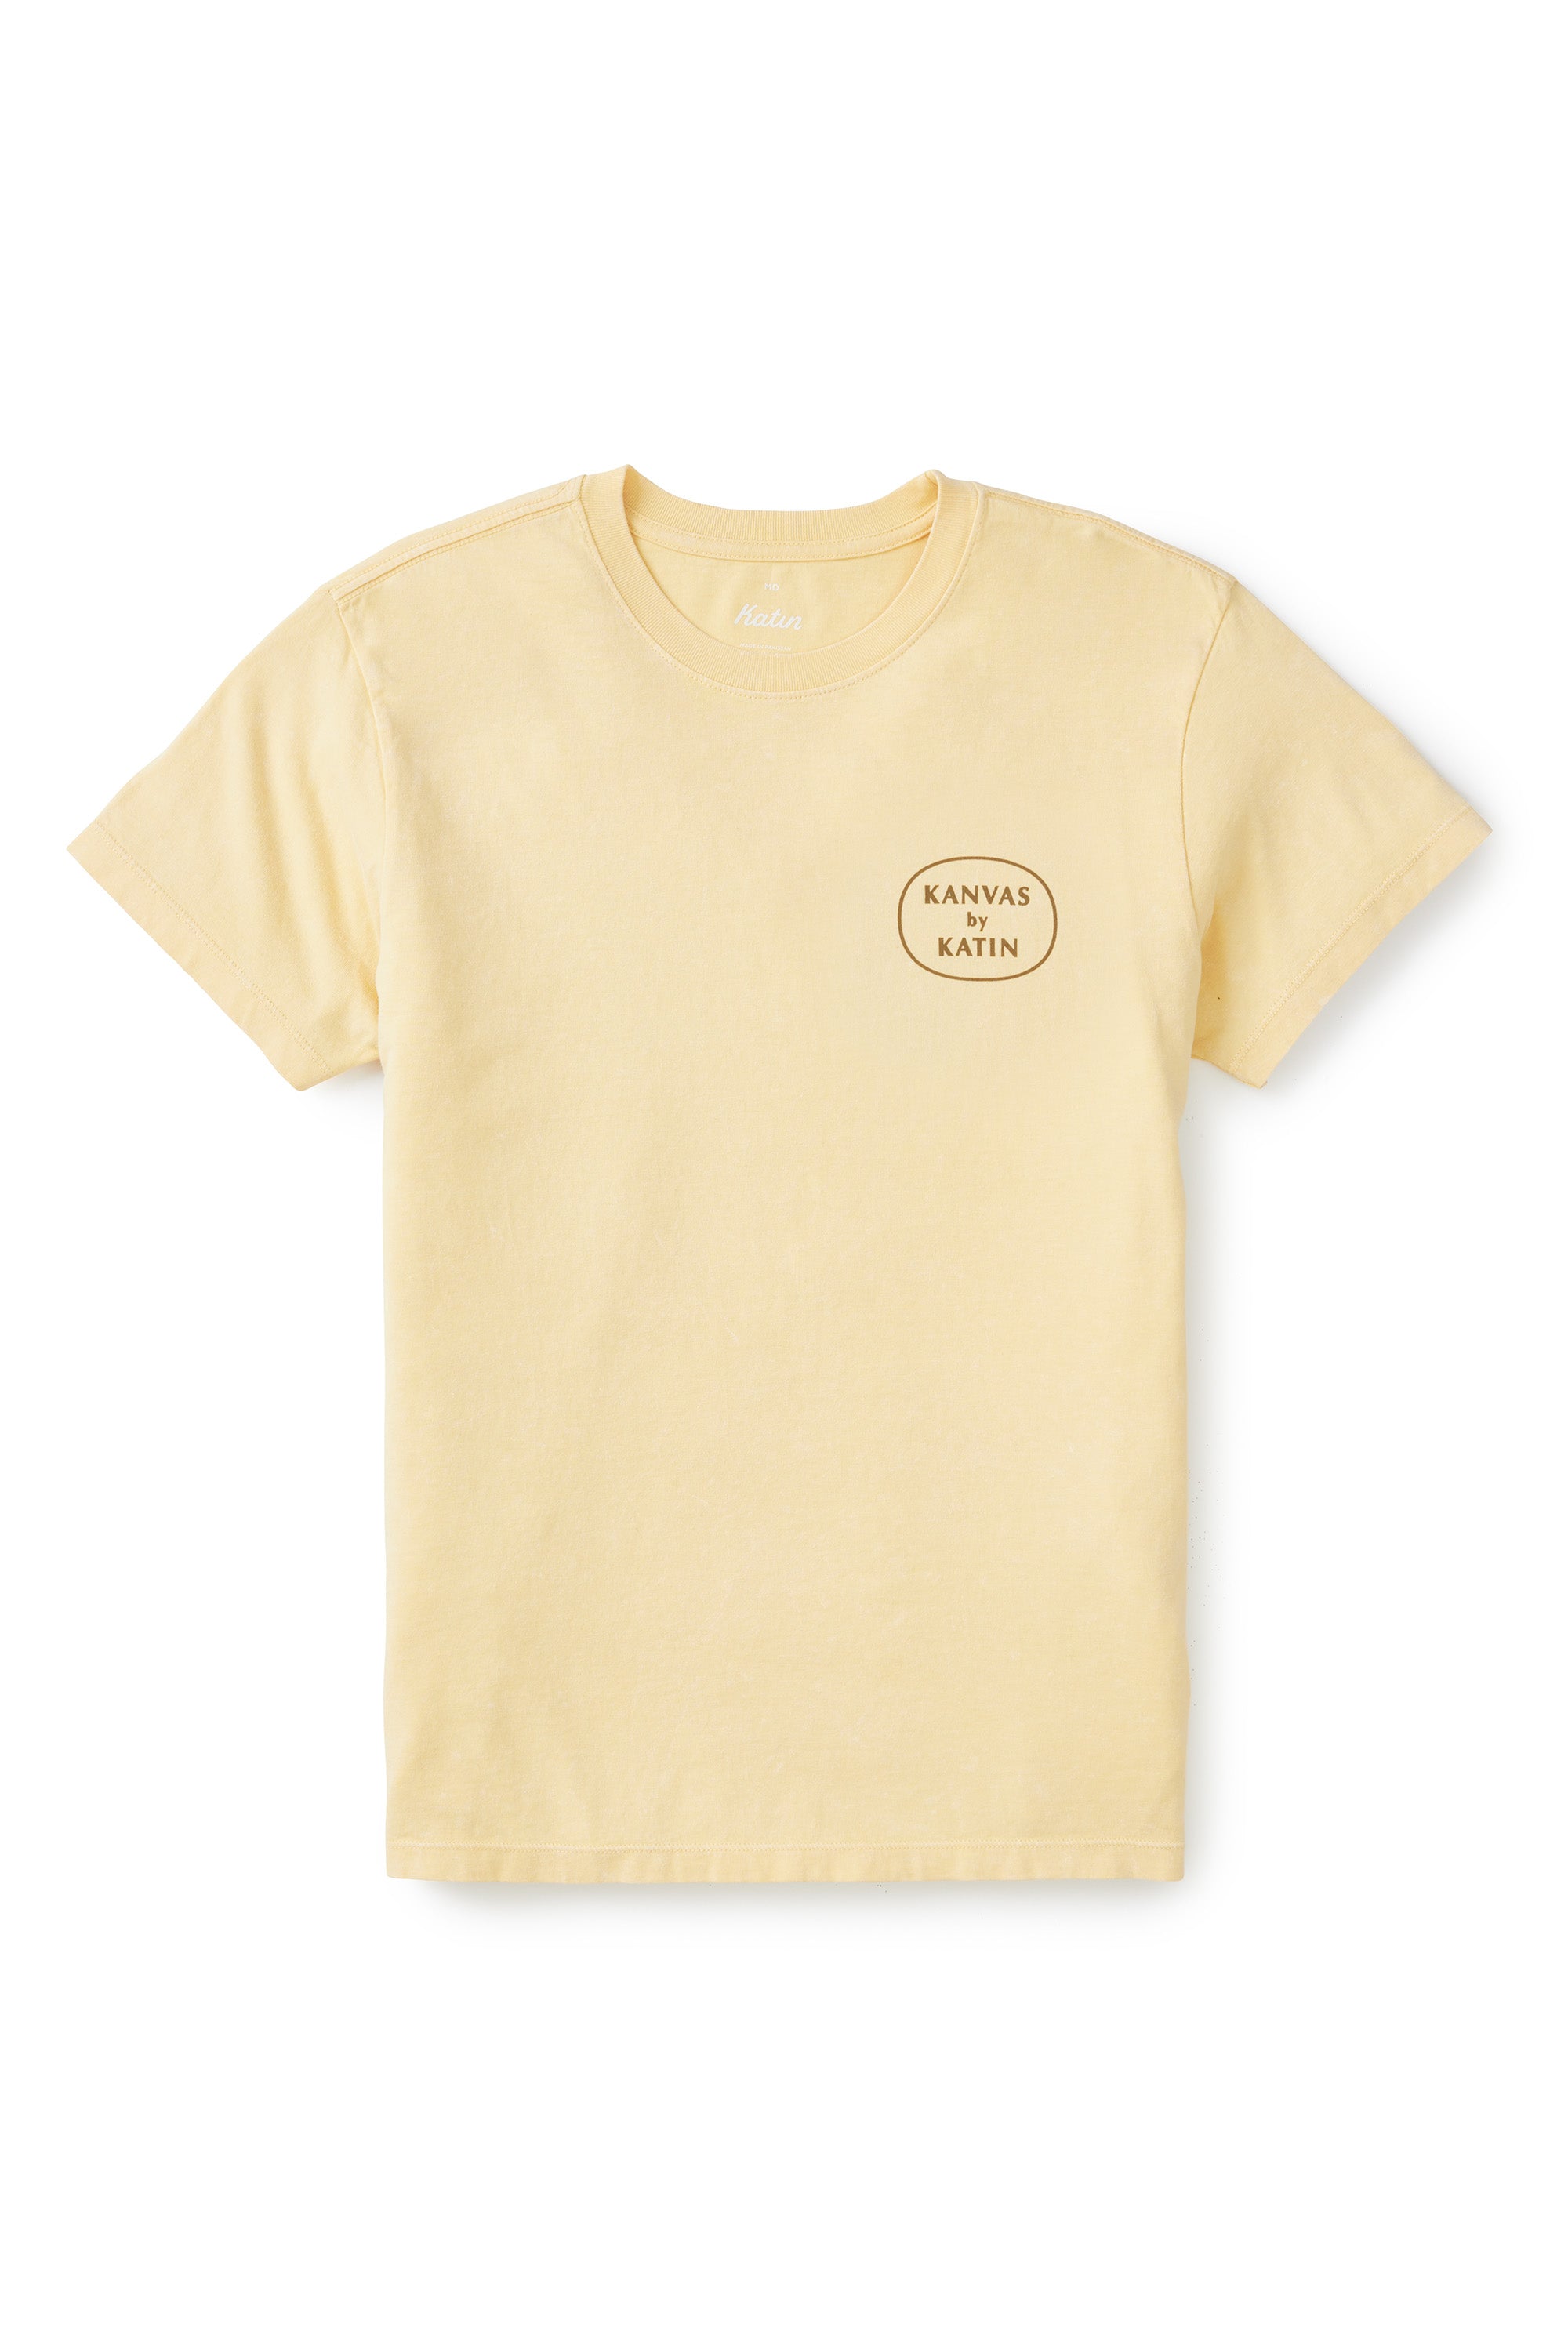 Triming T-shirt | Katin USA